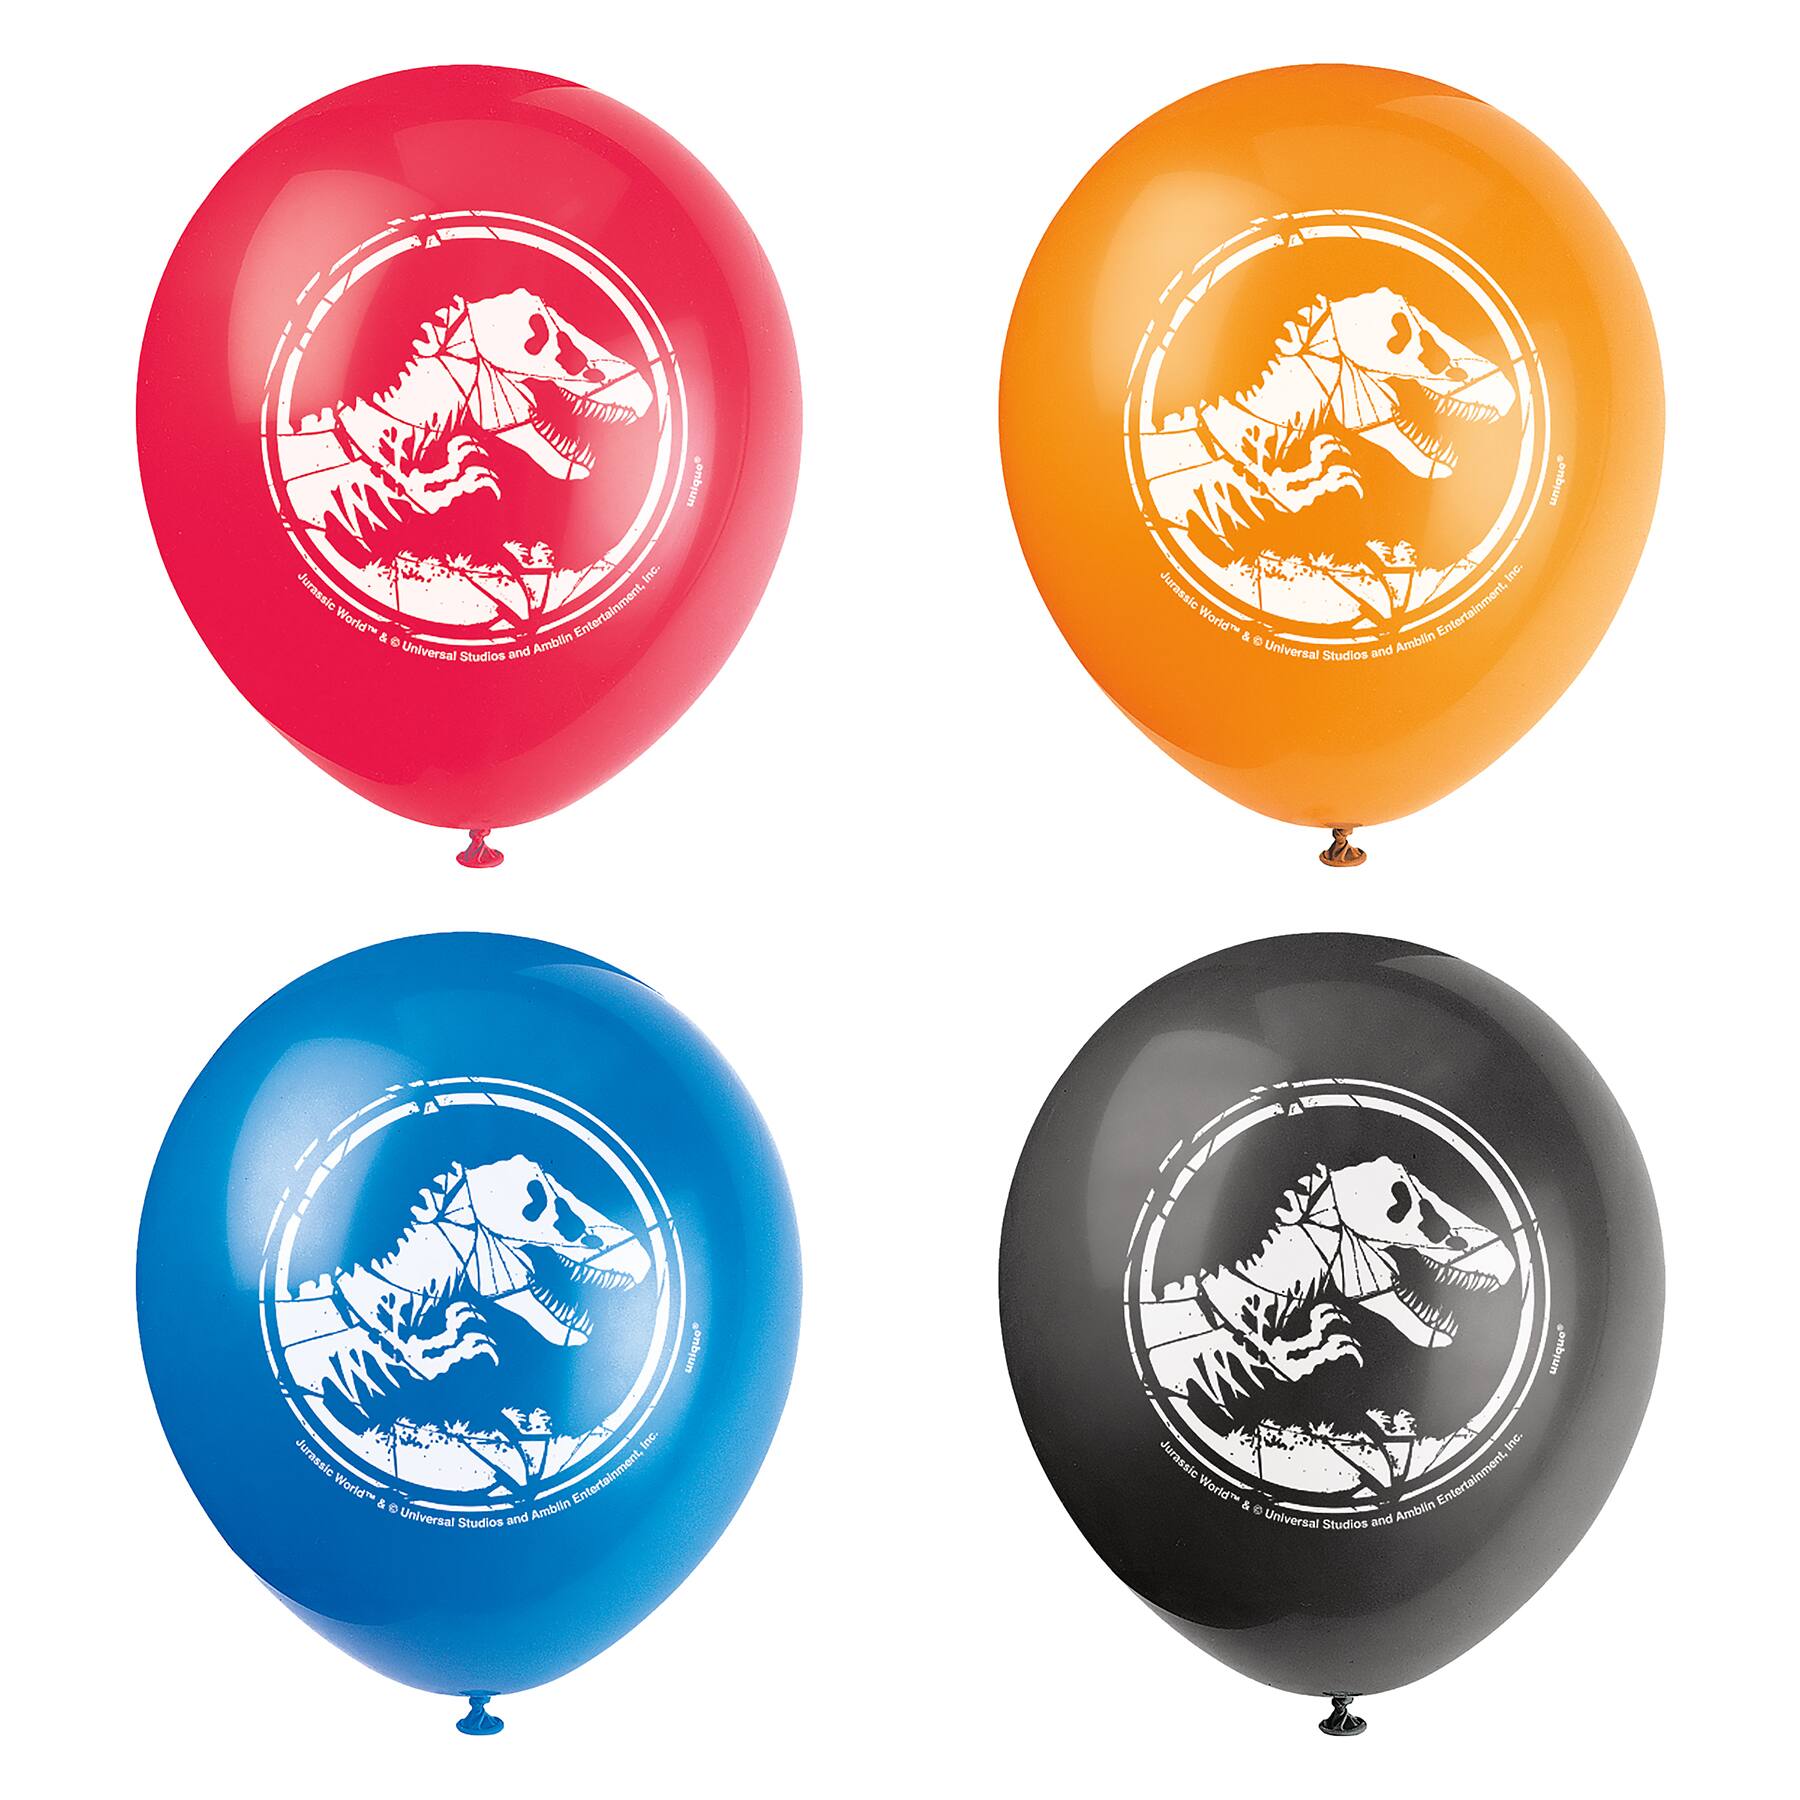 12 Latex Jurassic World Balloons 8ct